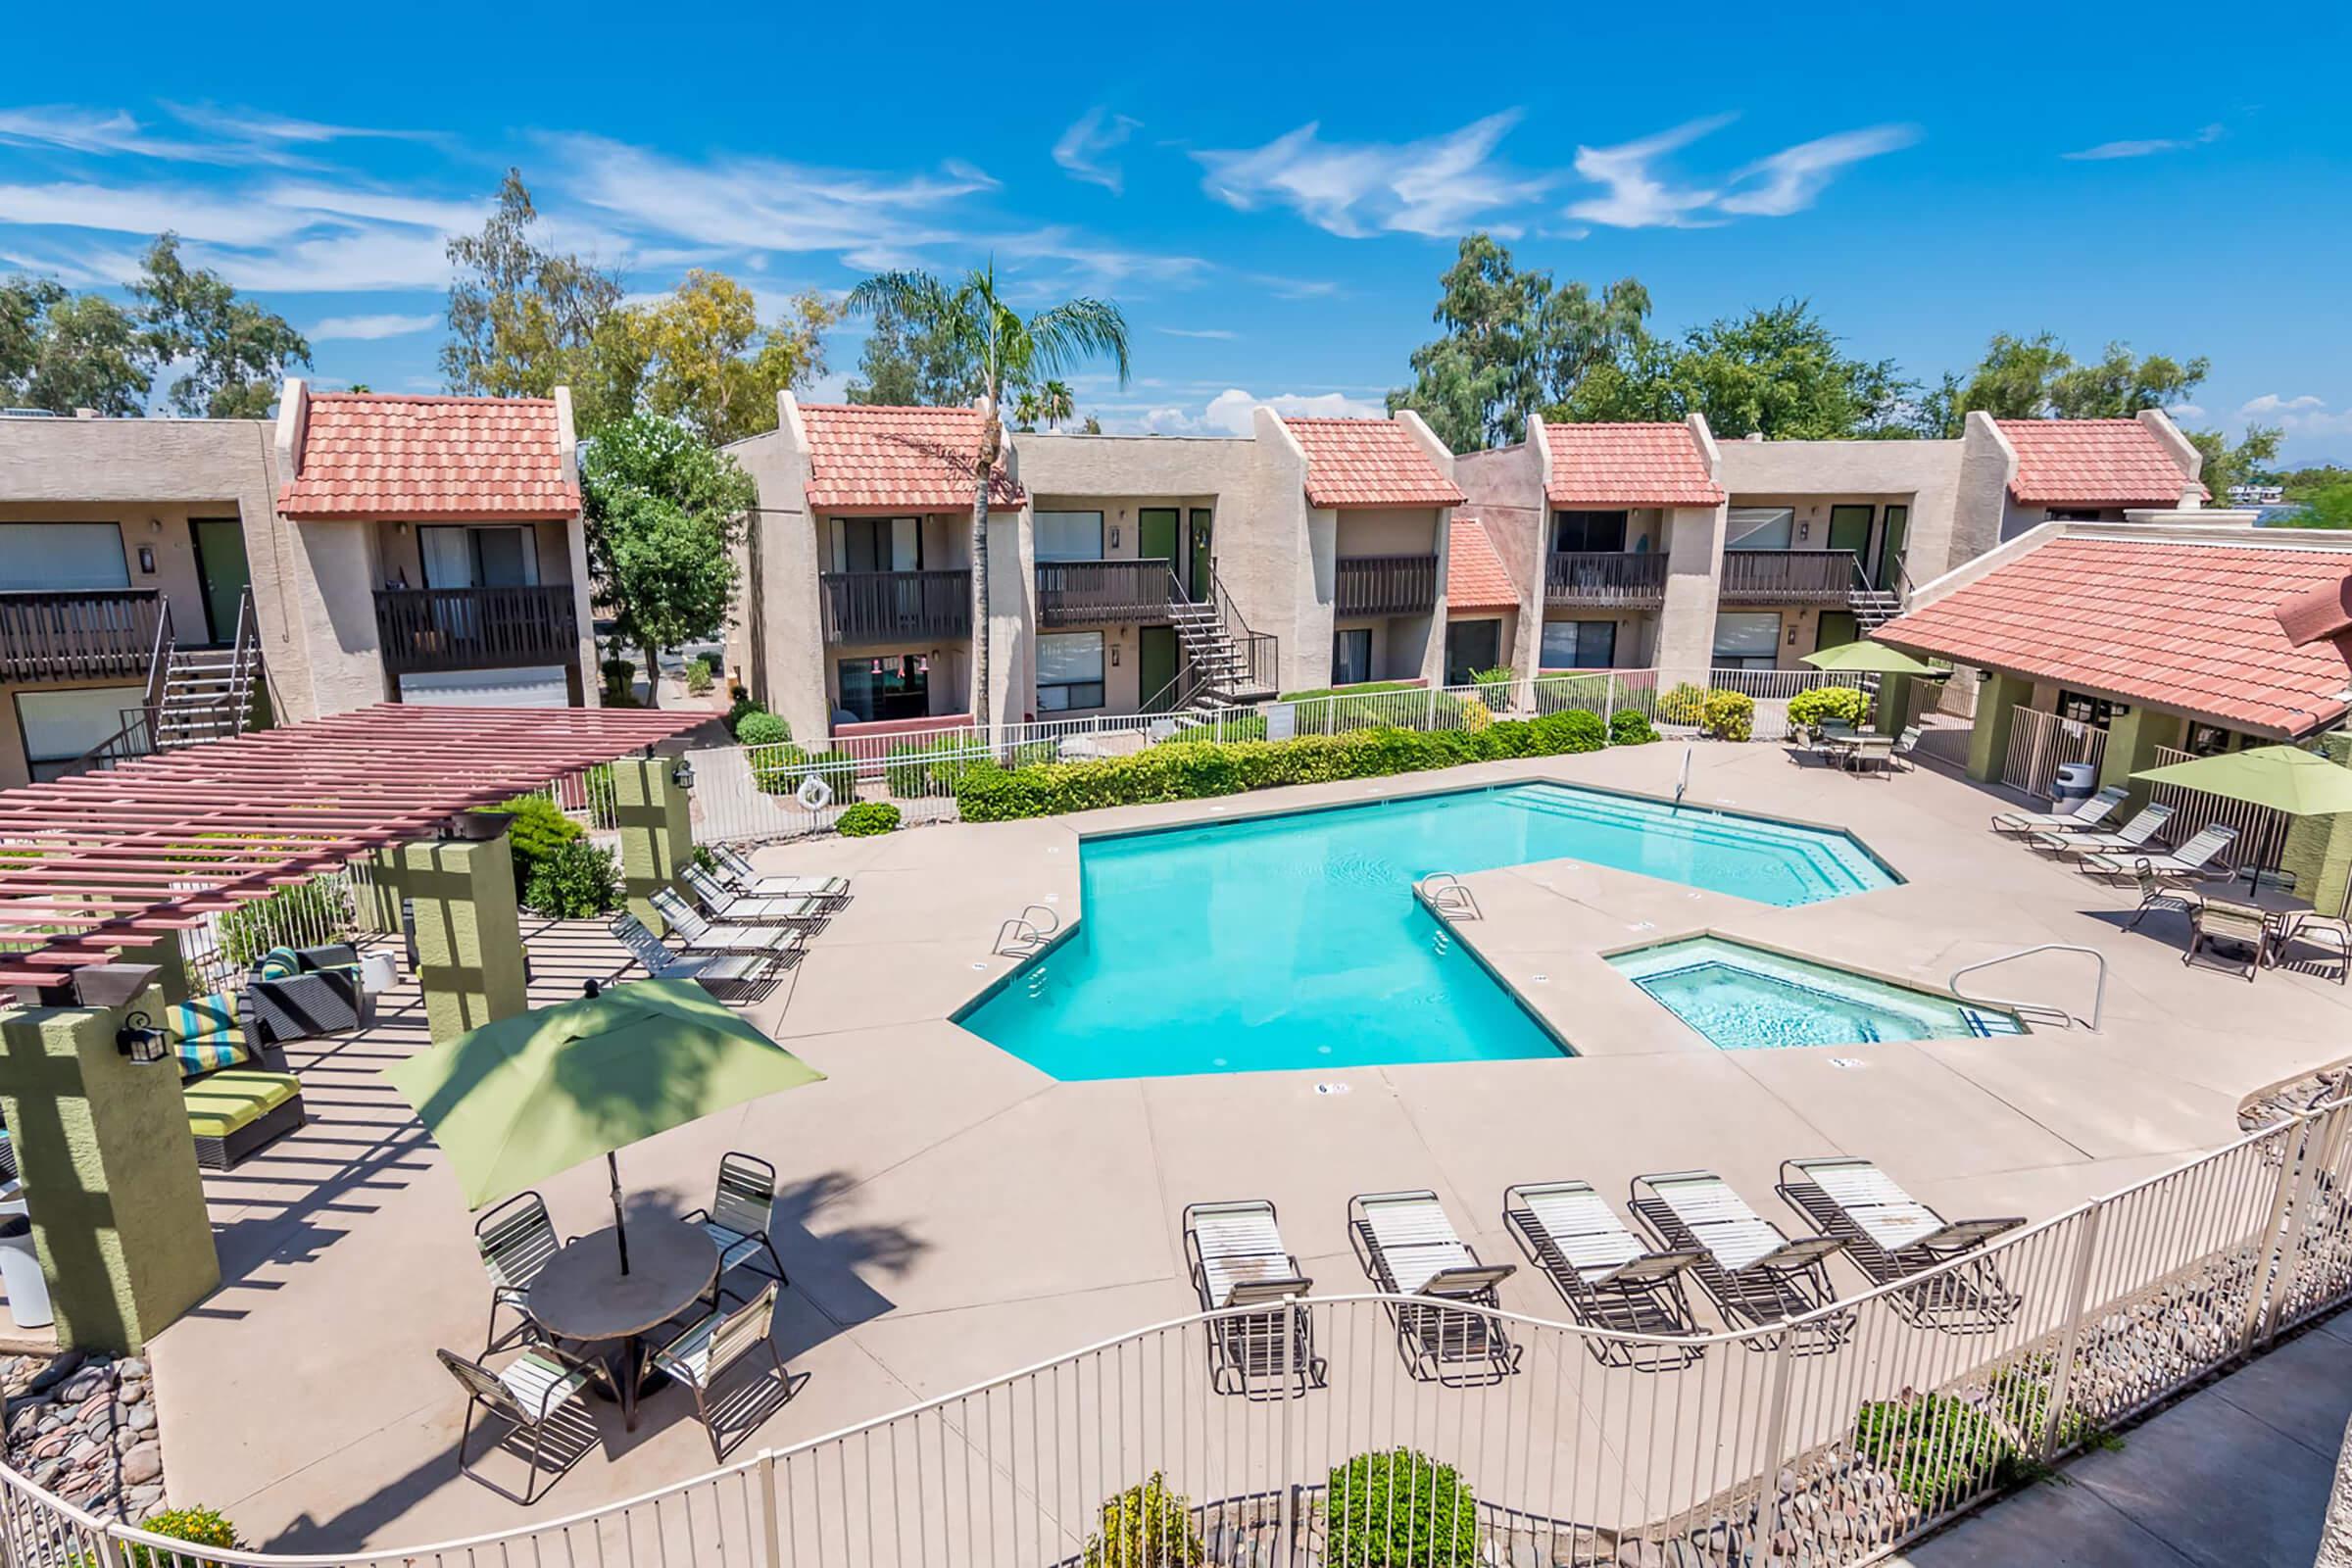 Sparkling Swimming Pool and a Luxurious Spa - Glenridge Apartments - Glendale - Arizona